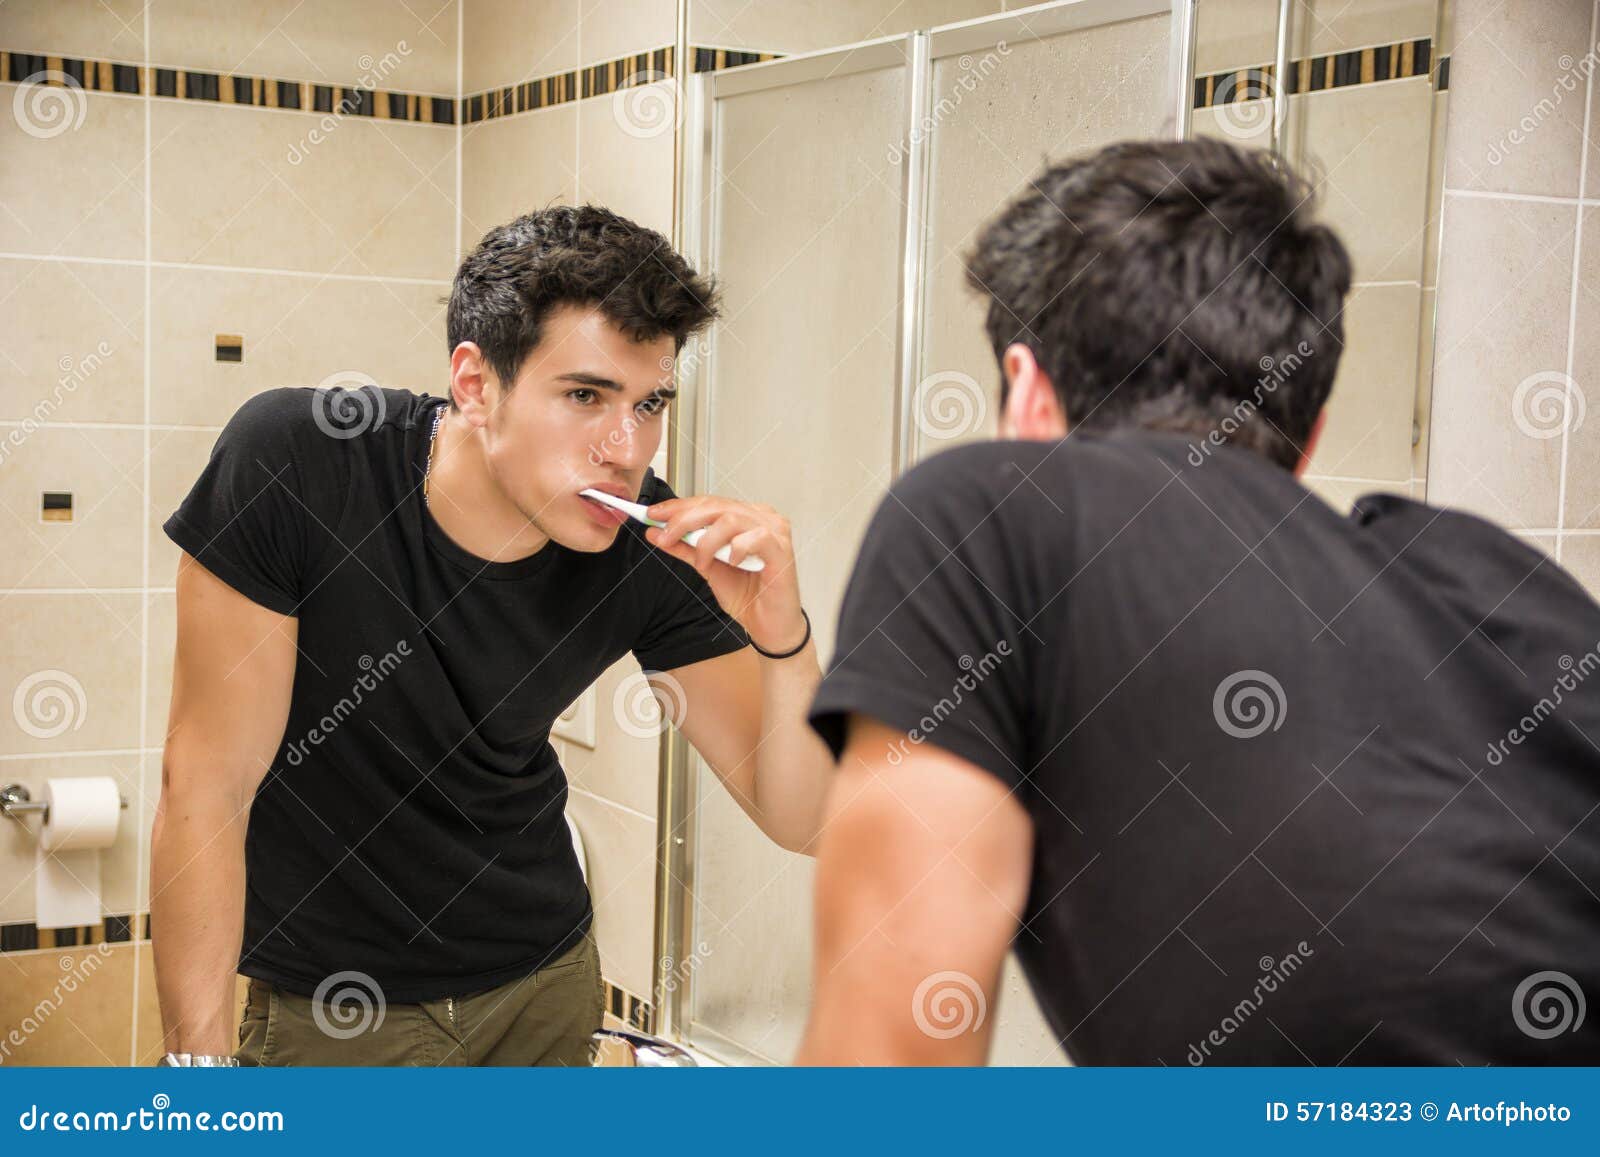 headshot of attractive young man brushing teeth